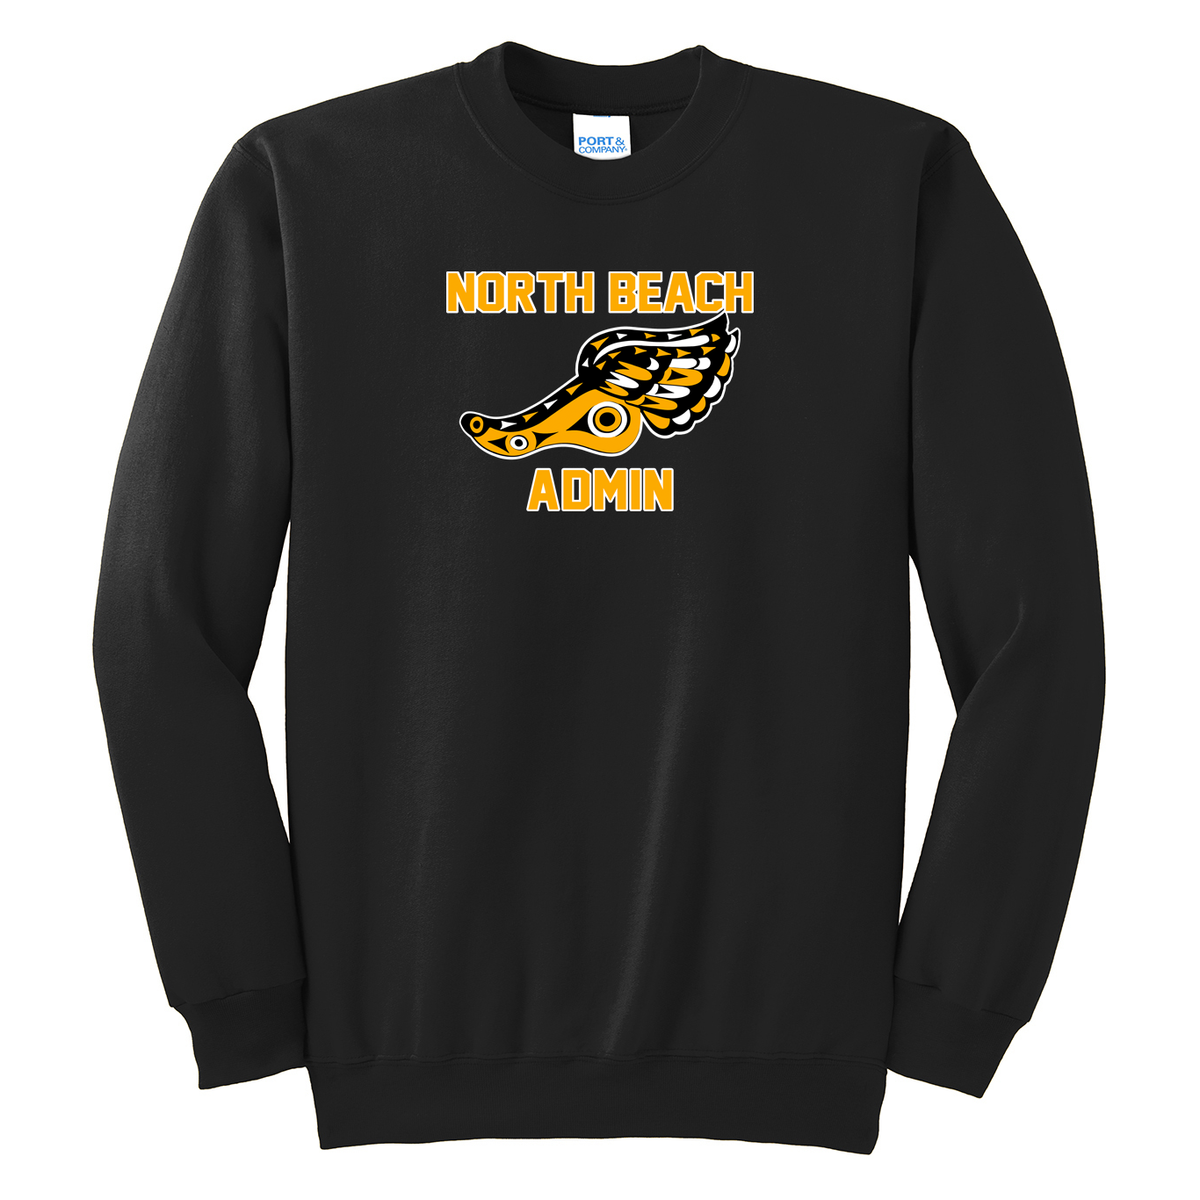 North Beach Admin Crew Neck Sweater